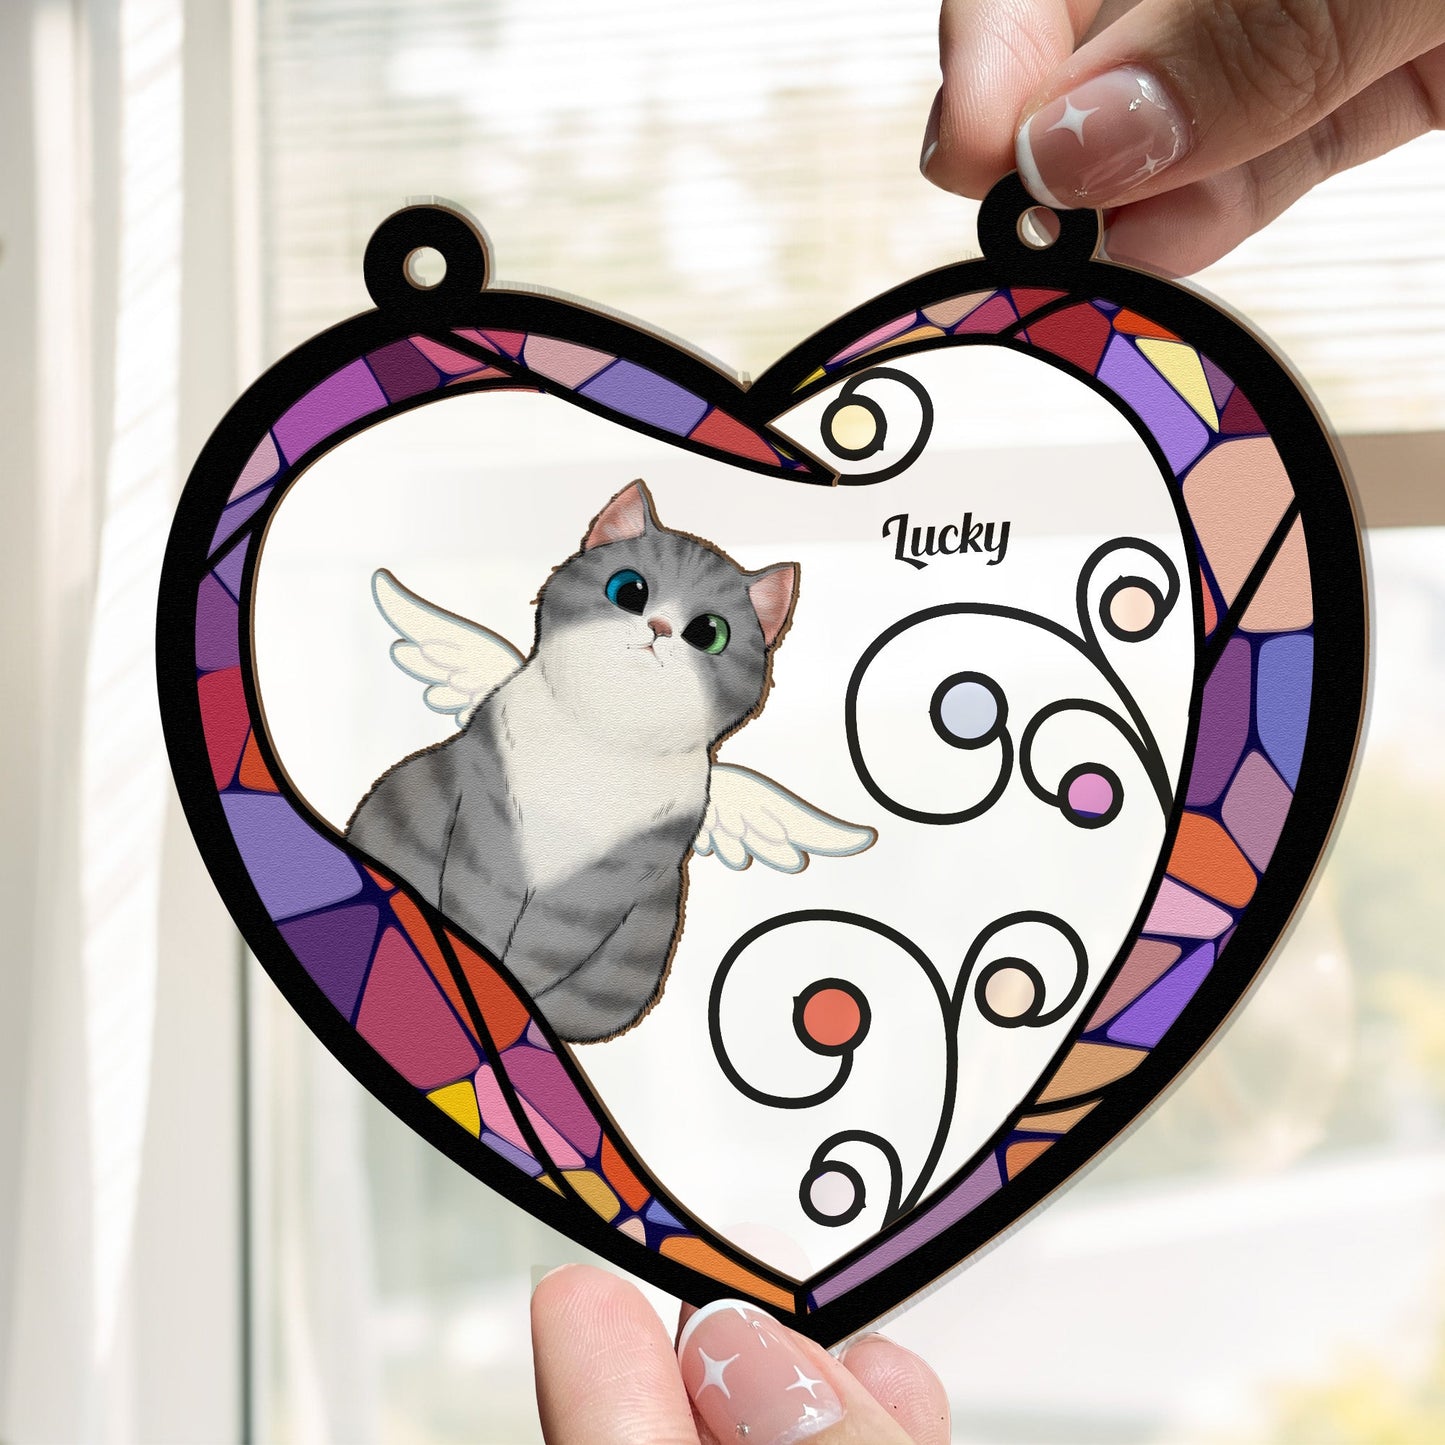 Cat Memorial Heart - Personalized Window Hanging Suncatcher Ornament